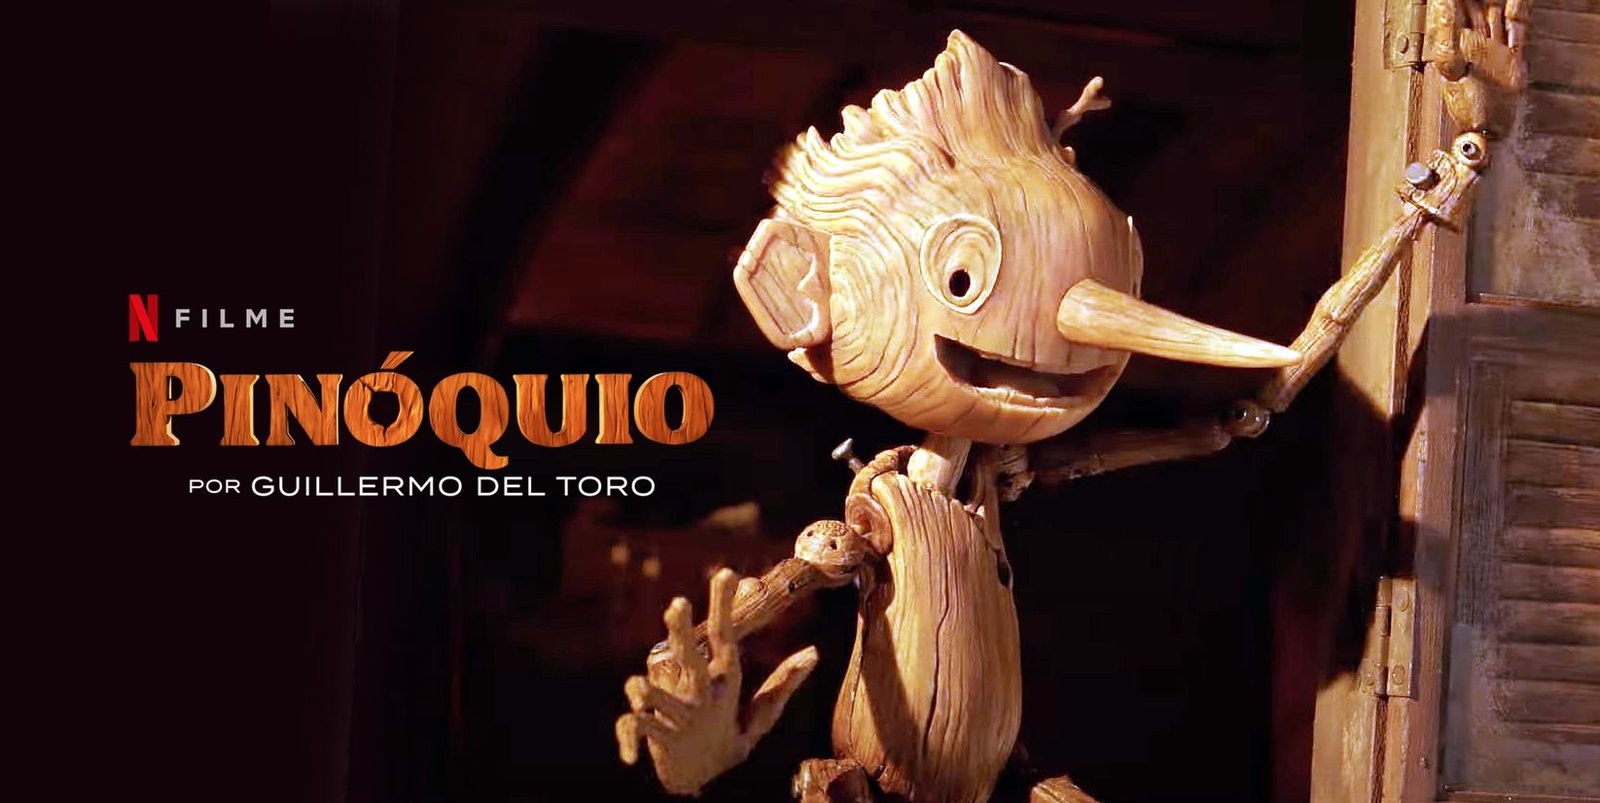 Pinóquio por Guillermo del Toro | Trailer da animação musical em stop-motion, de Guillermo del Toro na Netflix